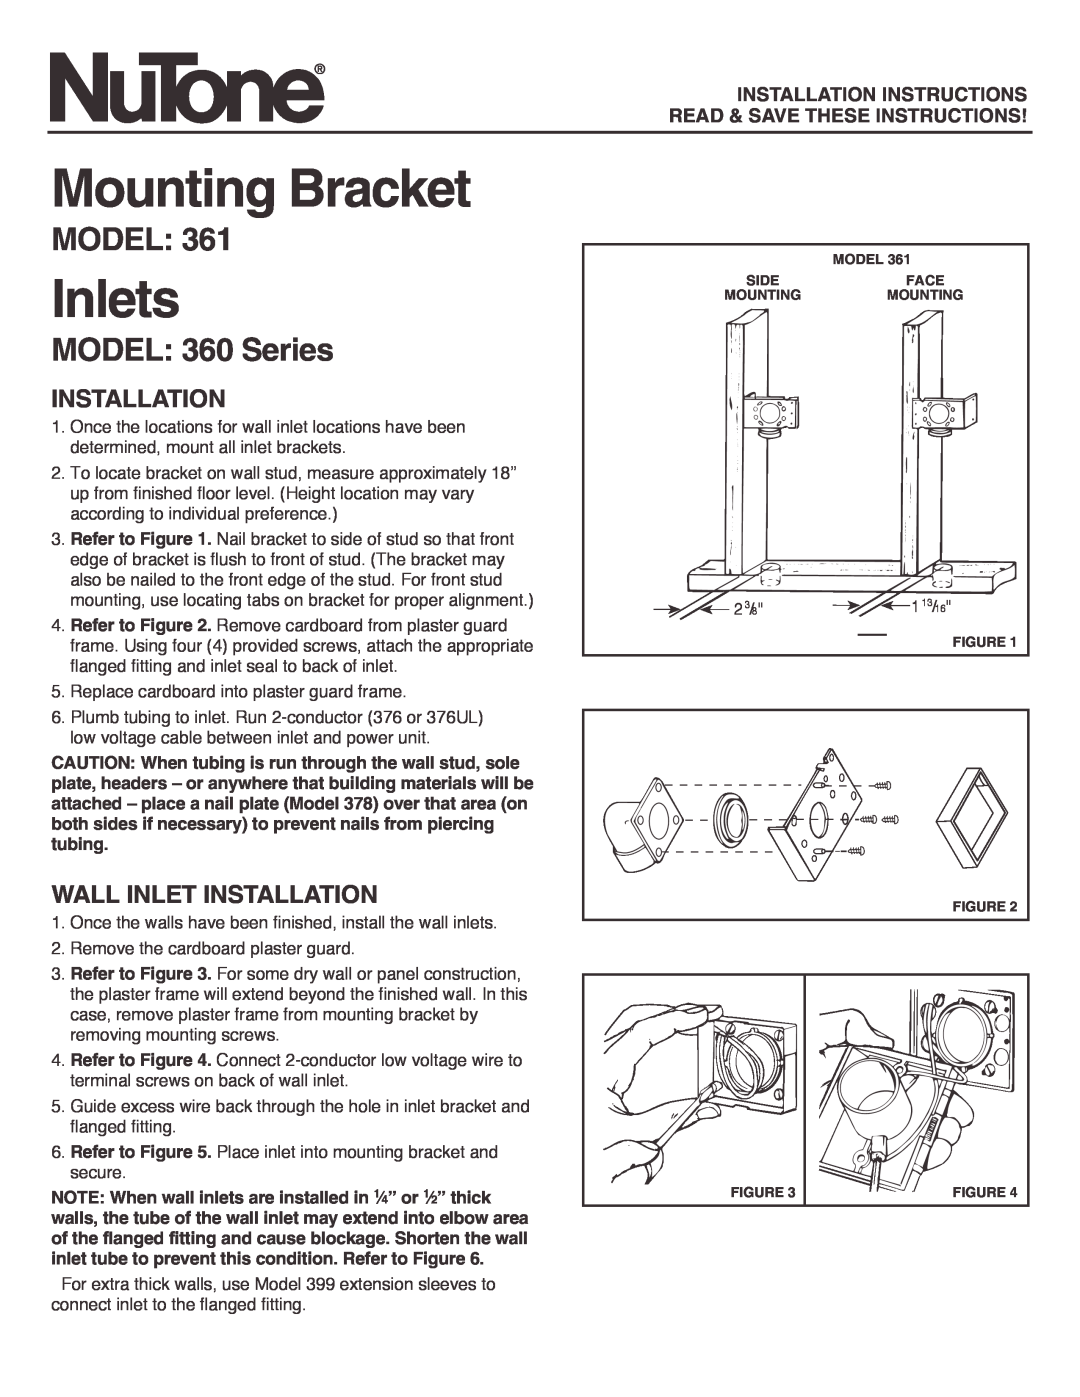 NuTone 361 installation instructions Mounting Bracket, Inlets, Model, MODEL 360 Series, Installation, 23/8, 113/16 